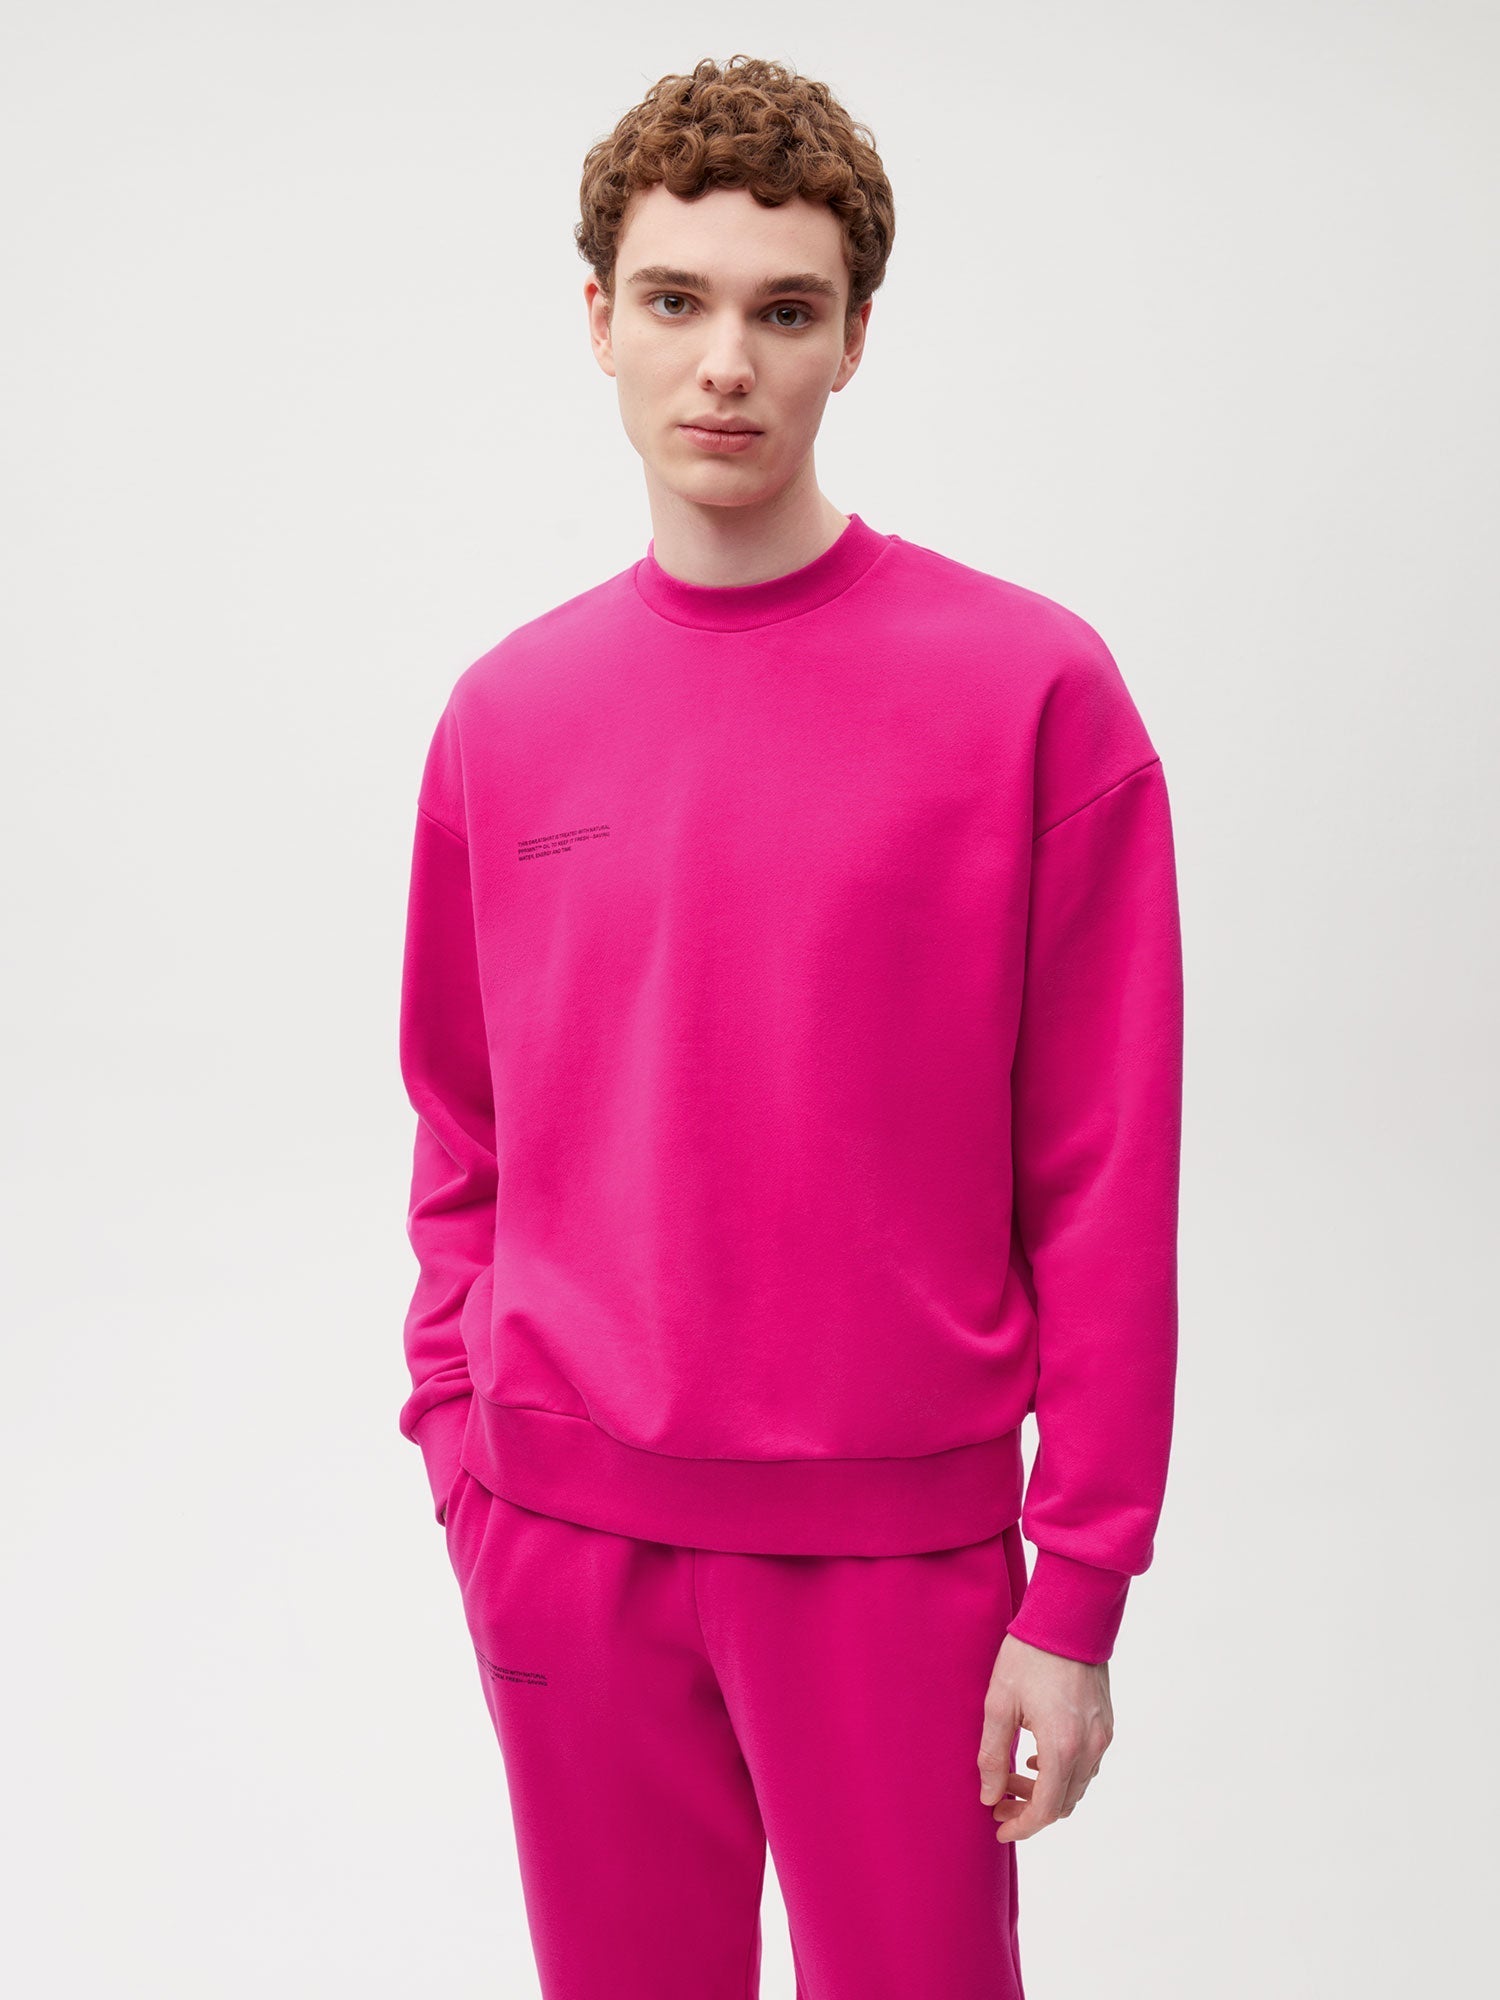 https://cdn.shopify.com/s/files/1/0035/1309/0115/products/Graphic-3-Sweatshirt-Foxglove-Pink-Male-1.jpg?v=1662476339